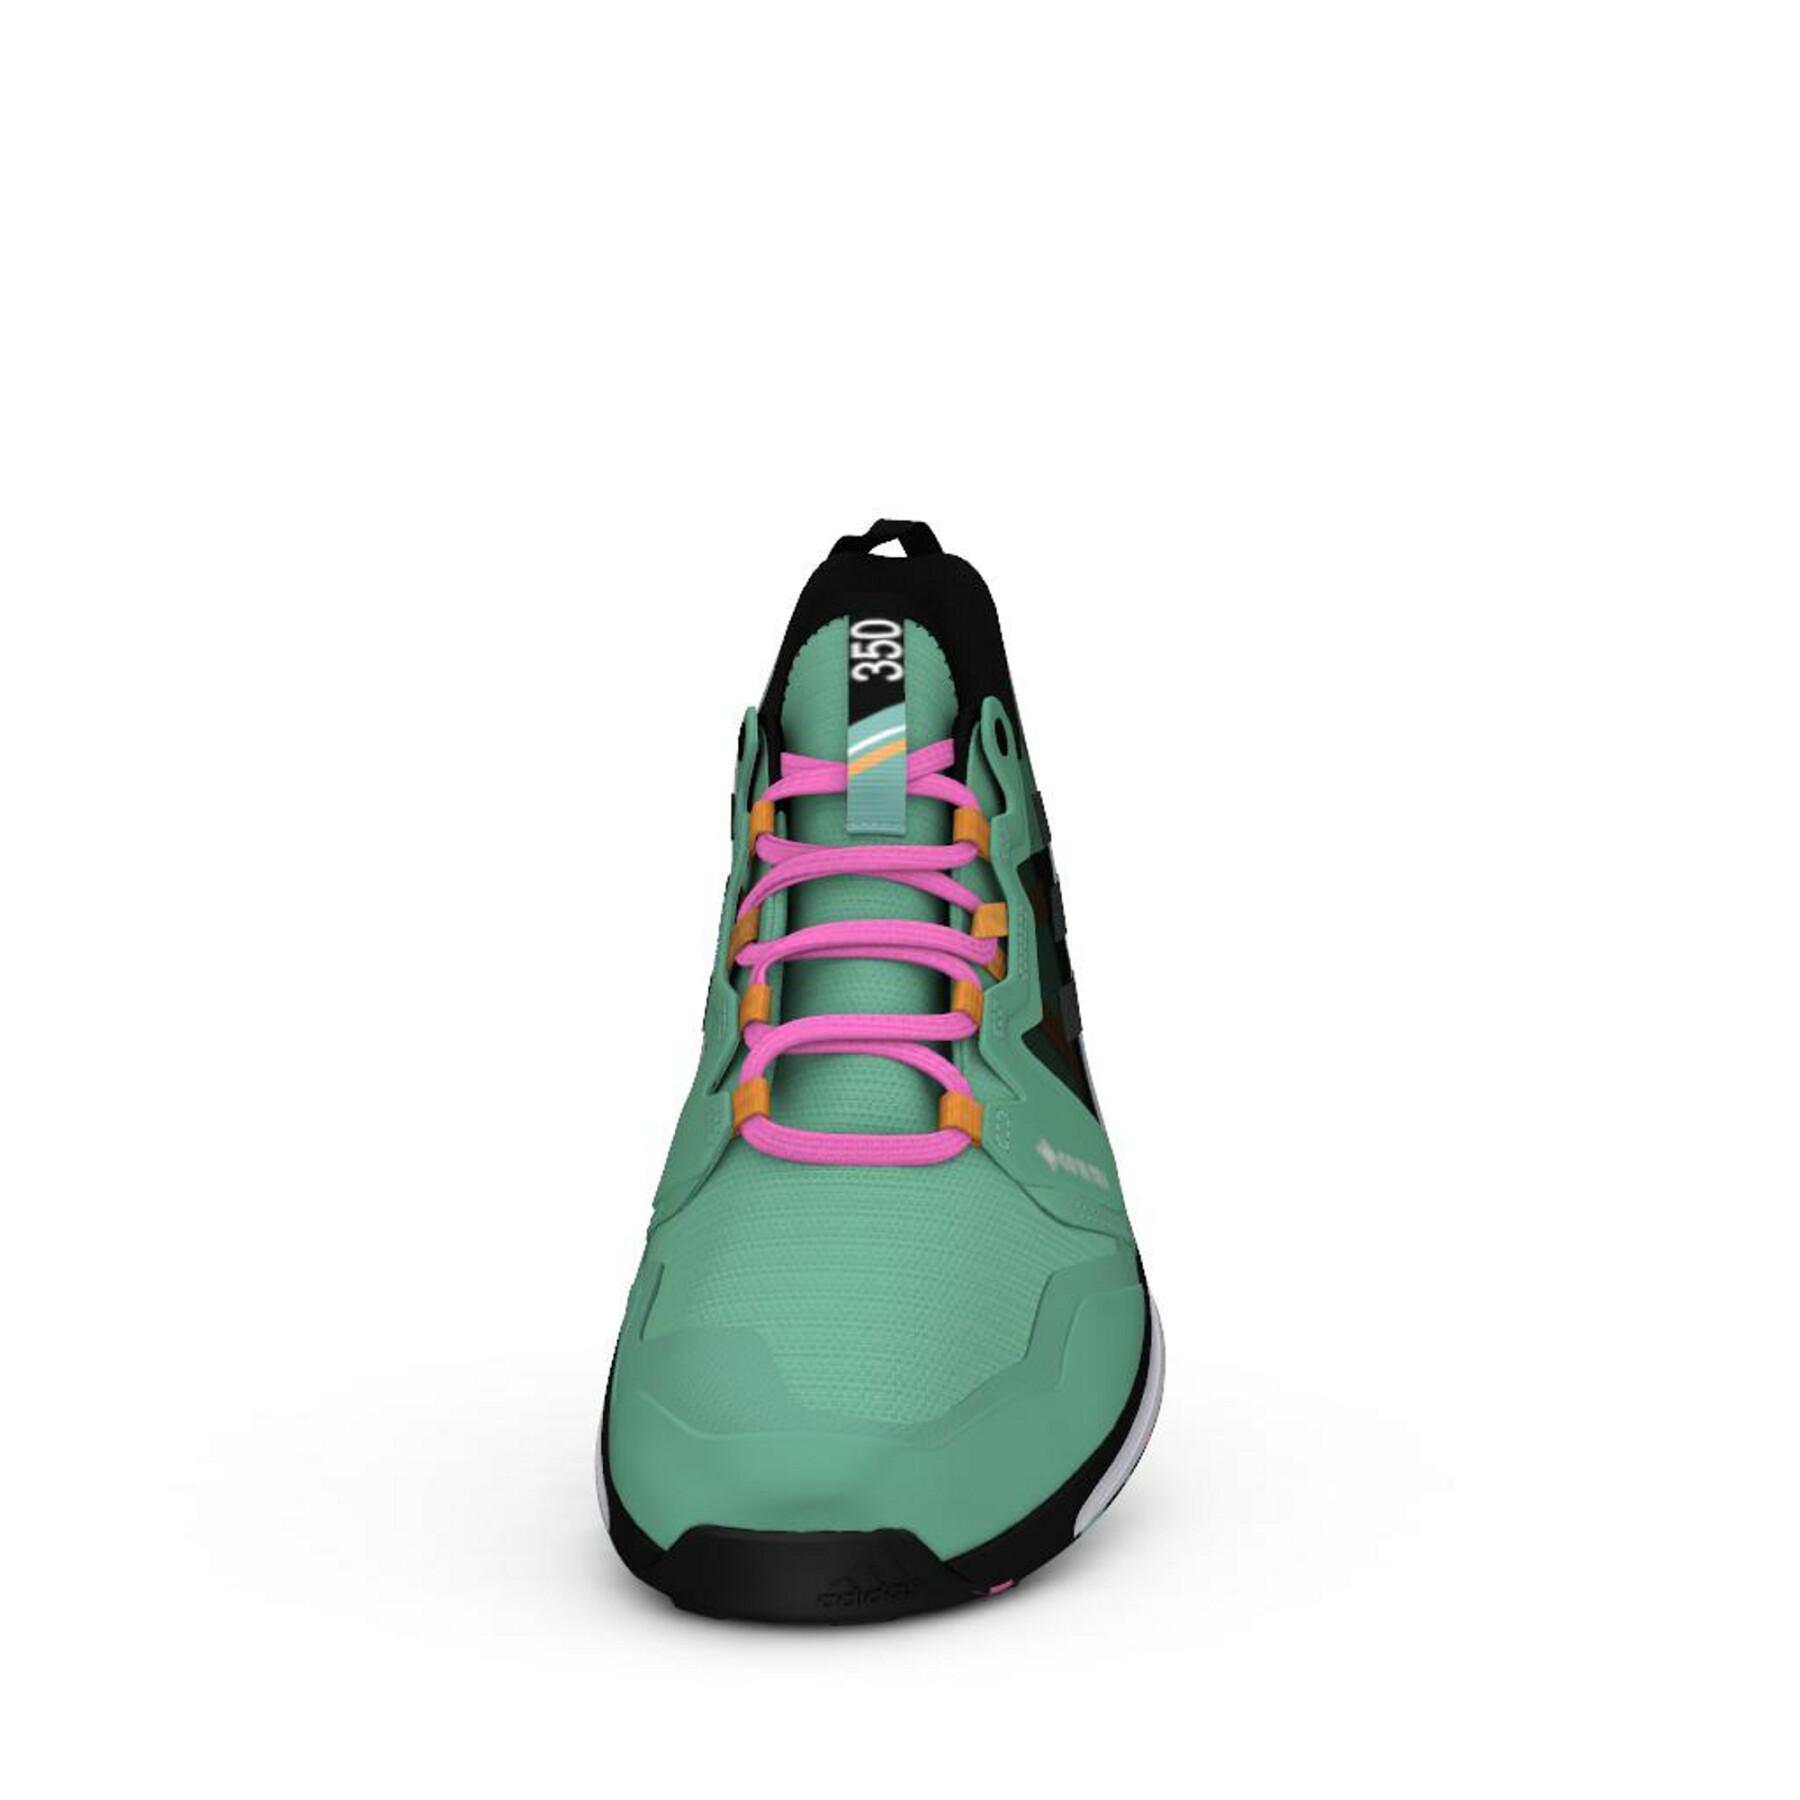 Trail shoes adidas Terrex Agravic GORE-TEX